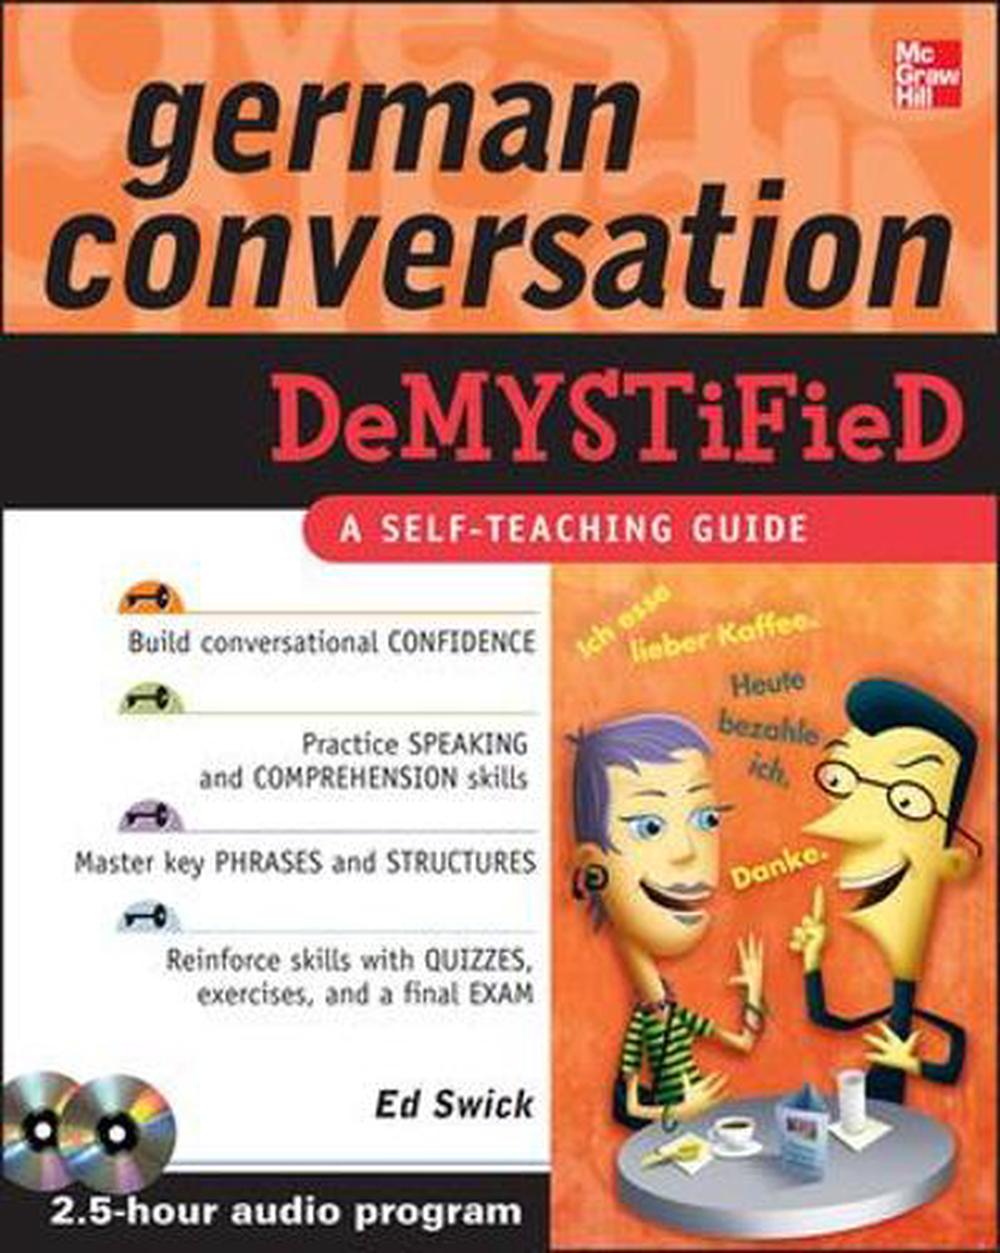 101 conversations in simple german olly richards pdf